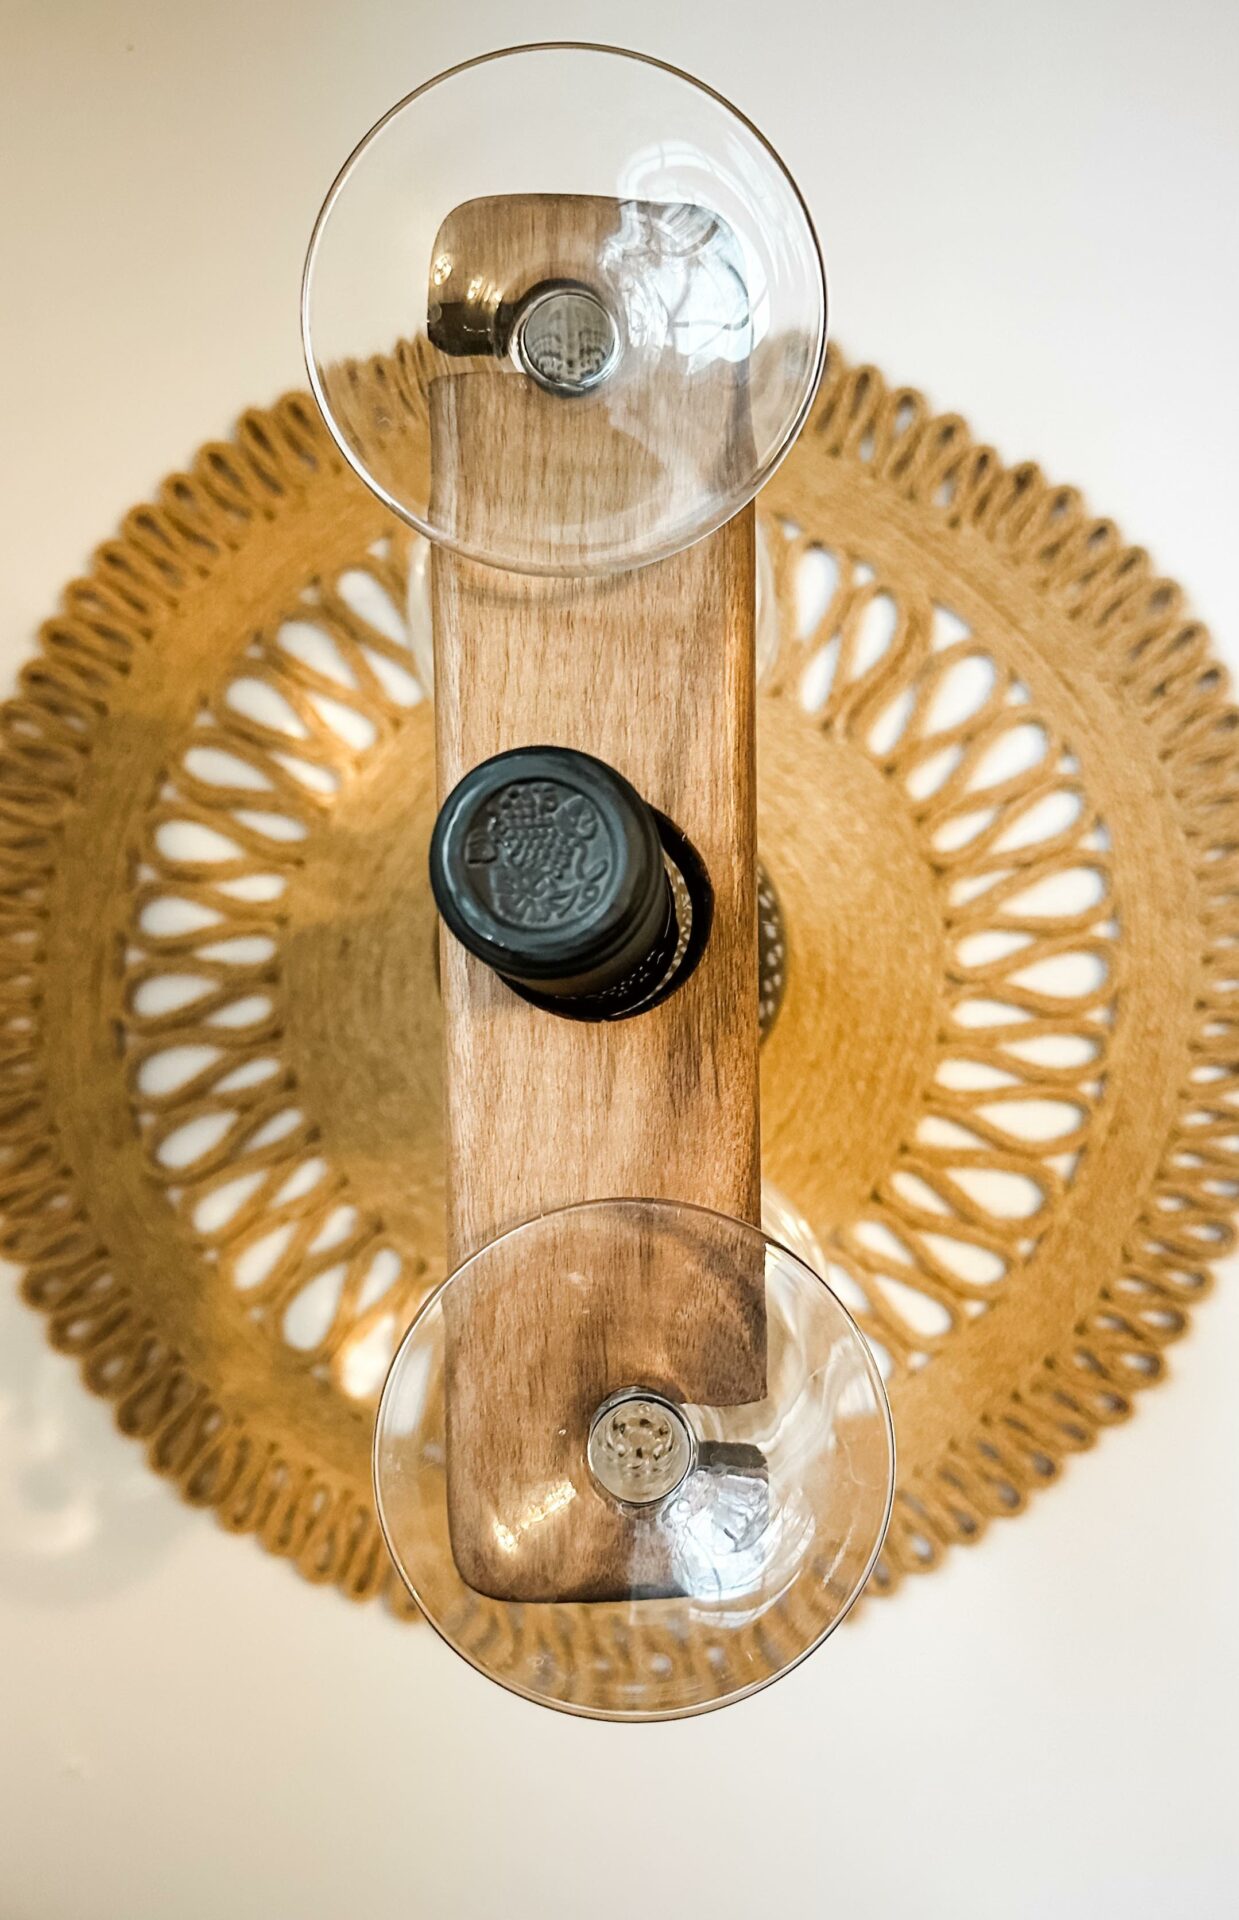 Wine bottle displaying a walnut wine glass caddy.